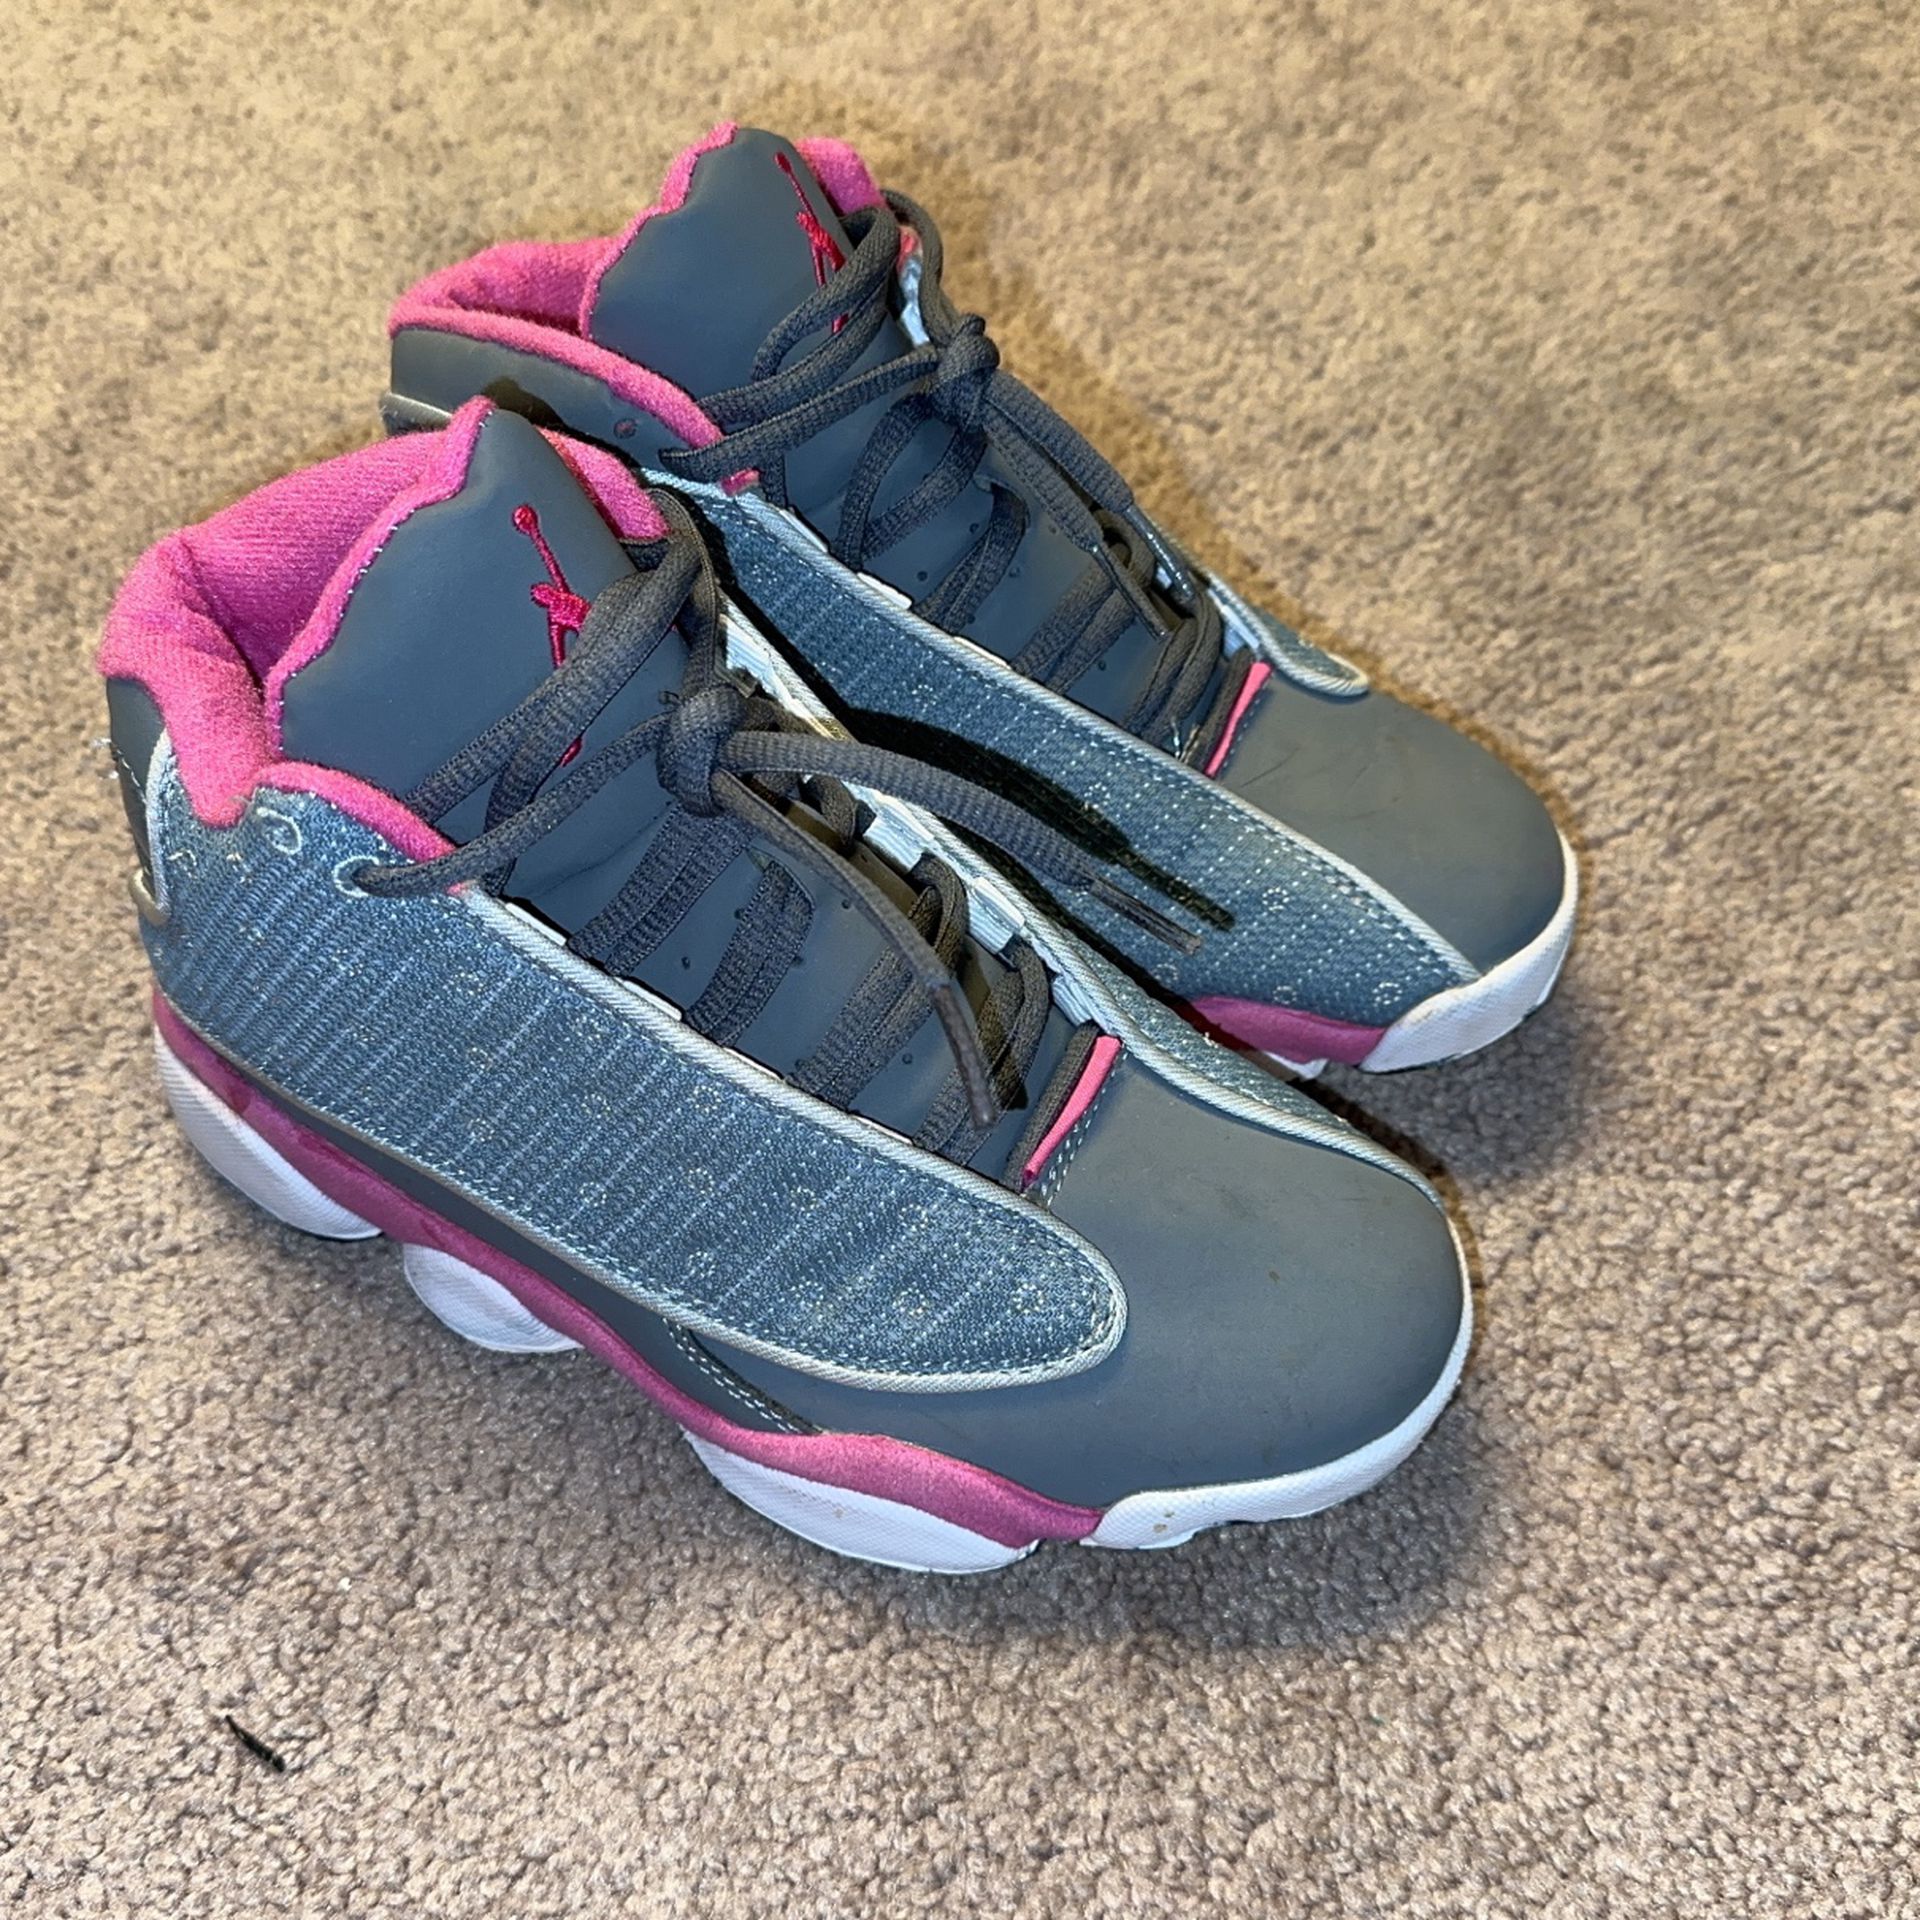 Jordan 13 Cool Grey Fusion Pink 